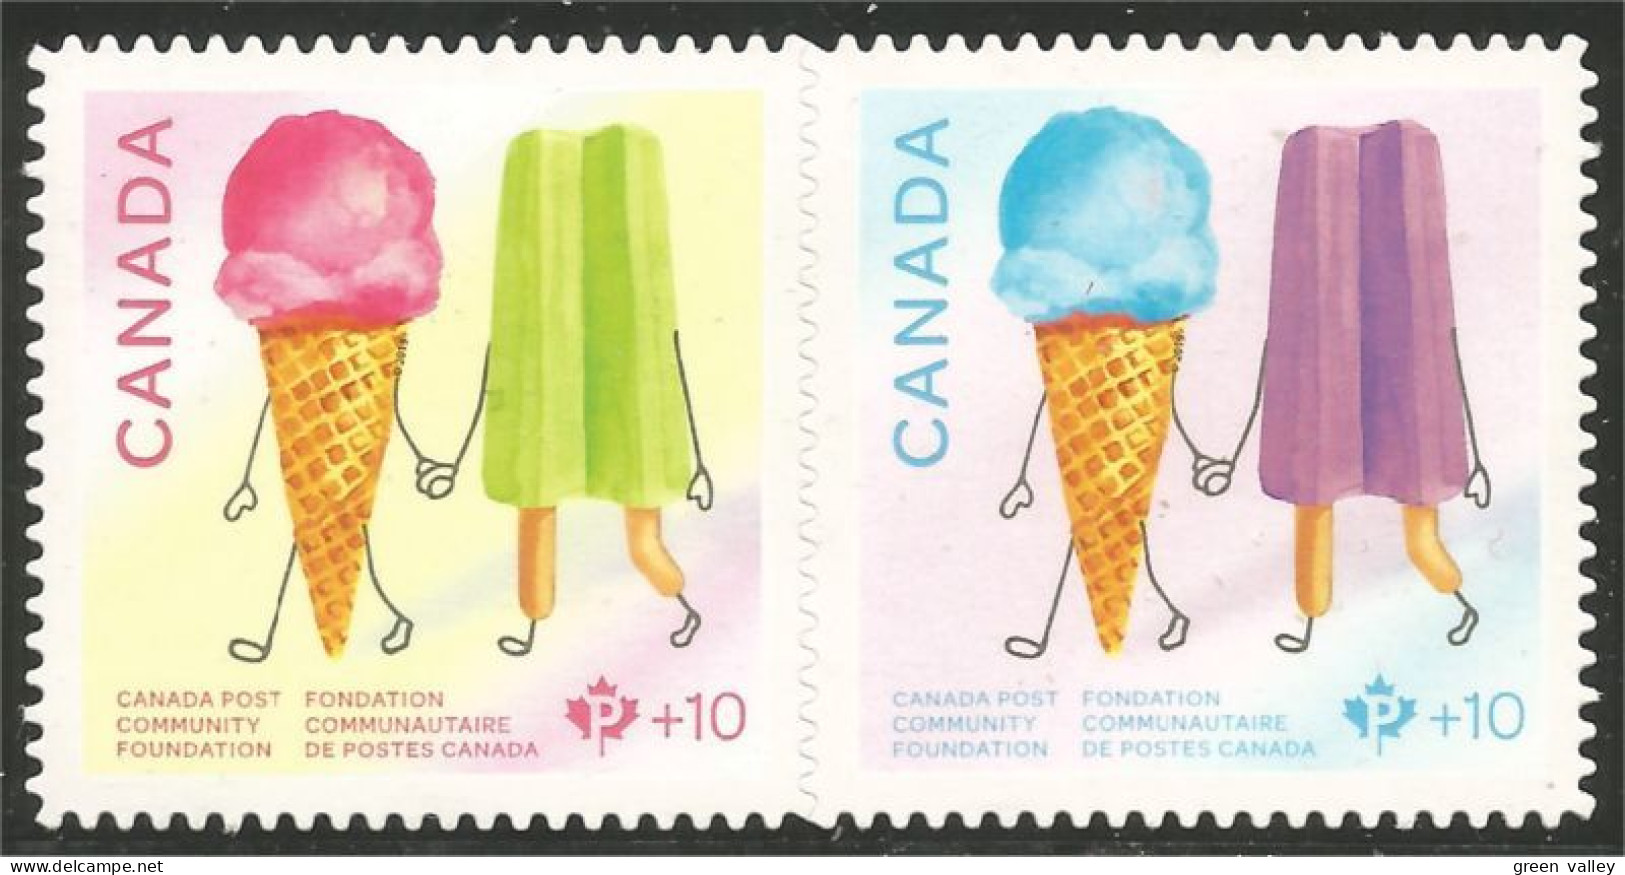 Canada Ice Cream Crème Glacée Glace Gelato Helado Eis Annual Collection Annuelle MNH ** Neuf SC (CB-28-29ia) - Neufs